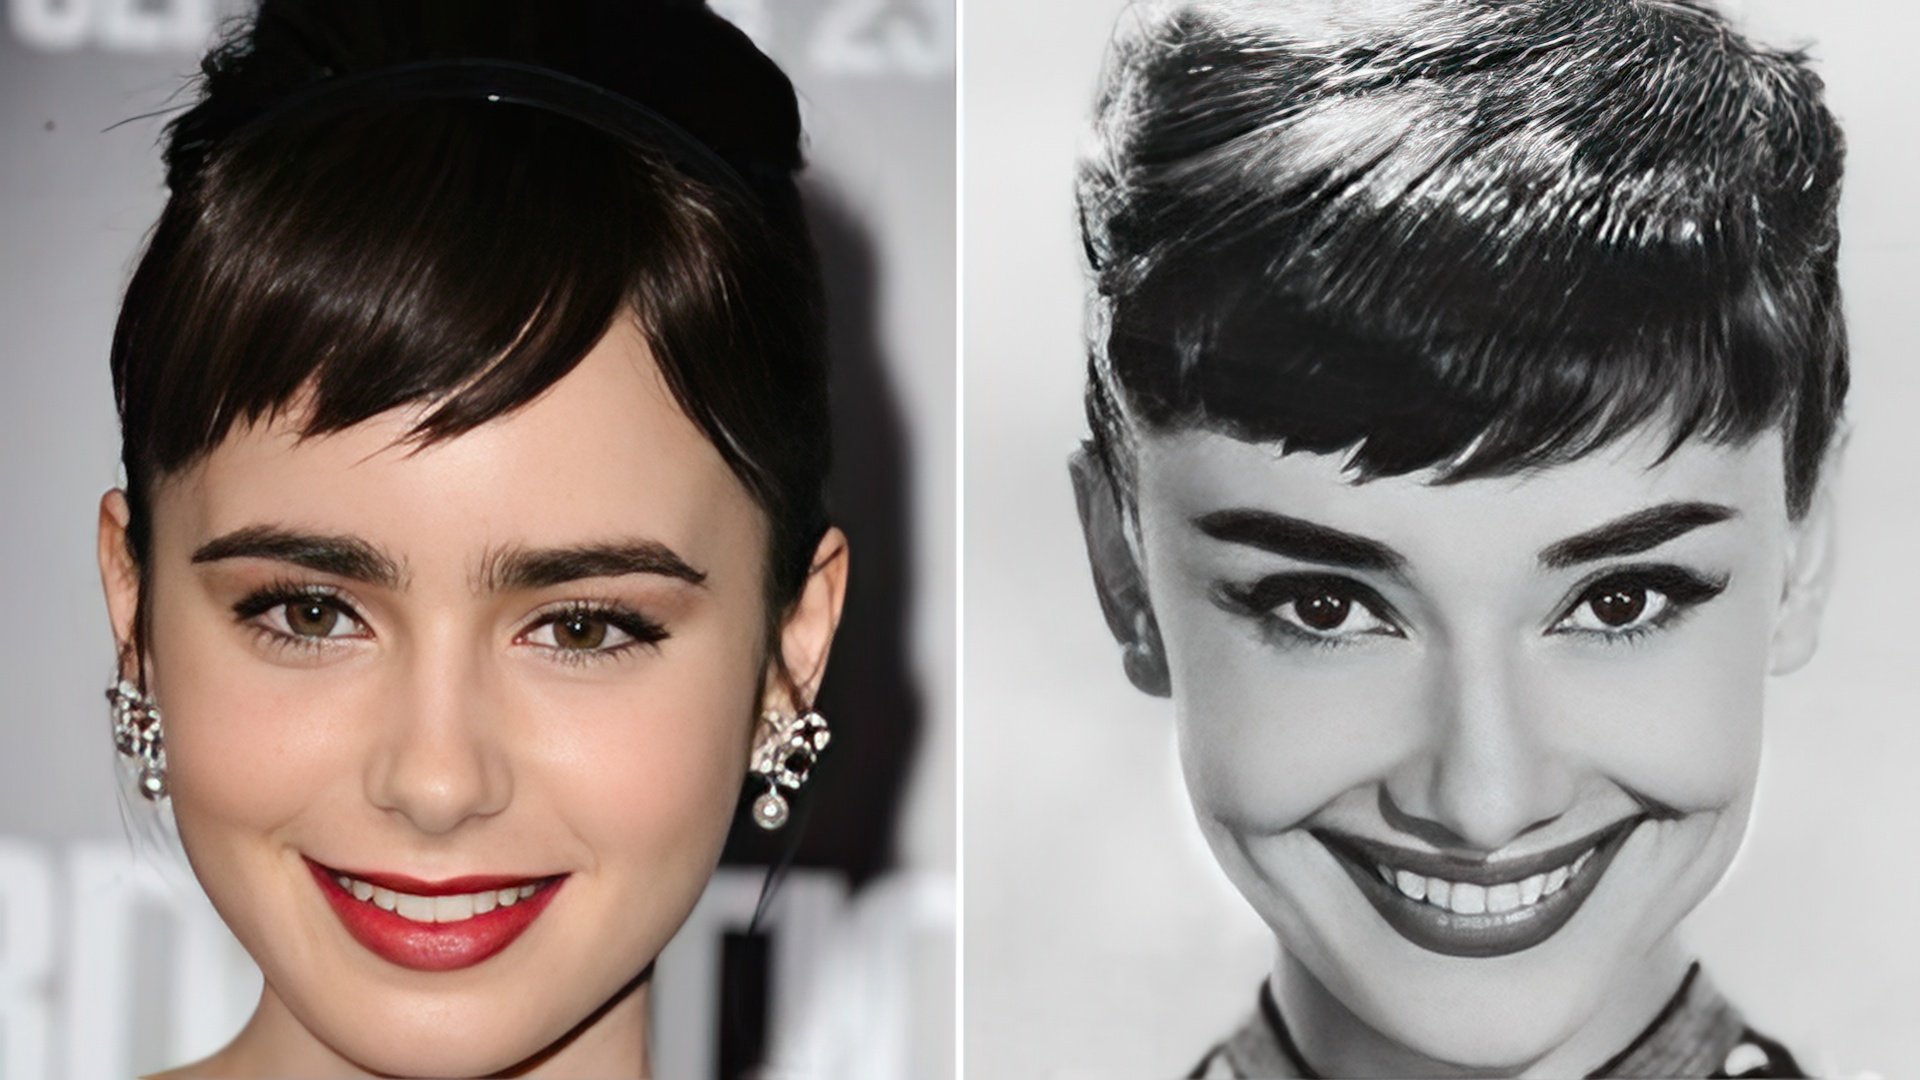 Lily Collins resembles Audrey Hepburn